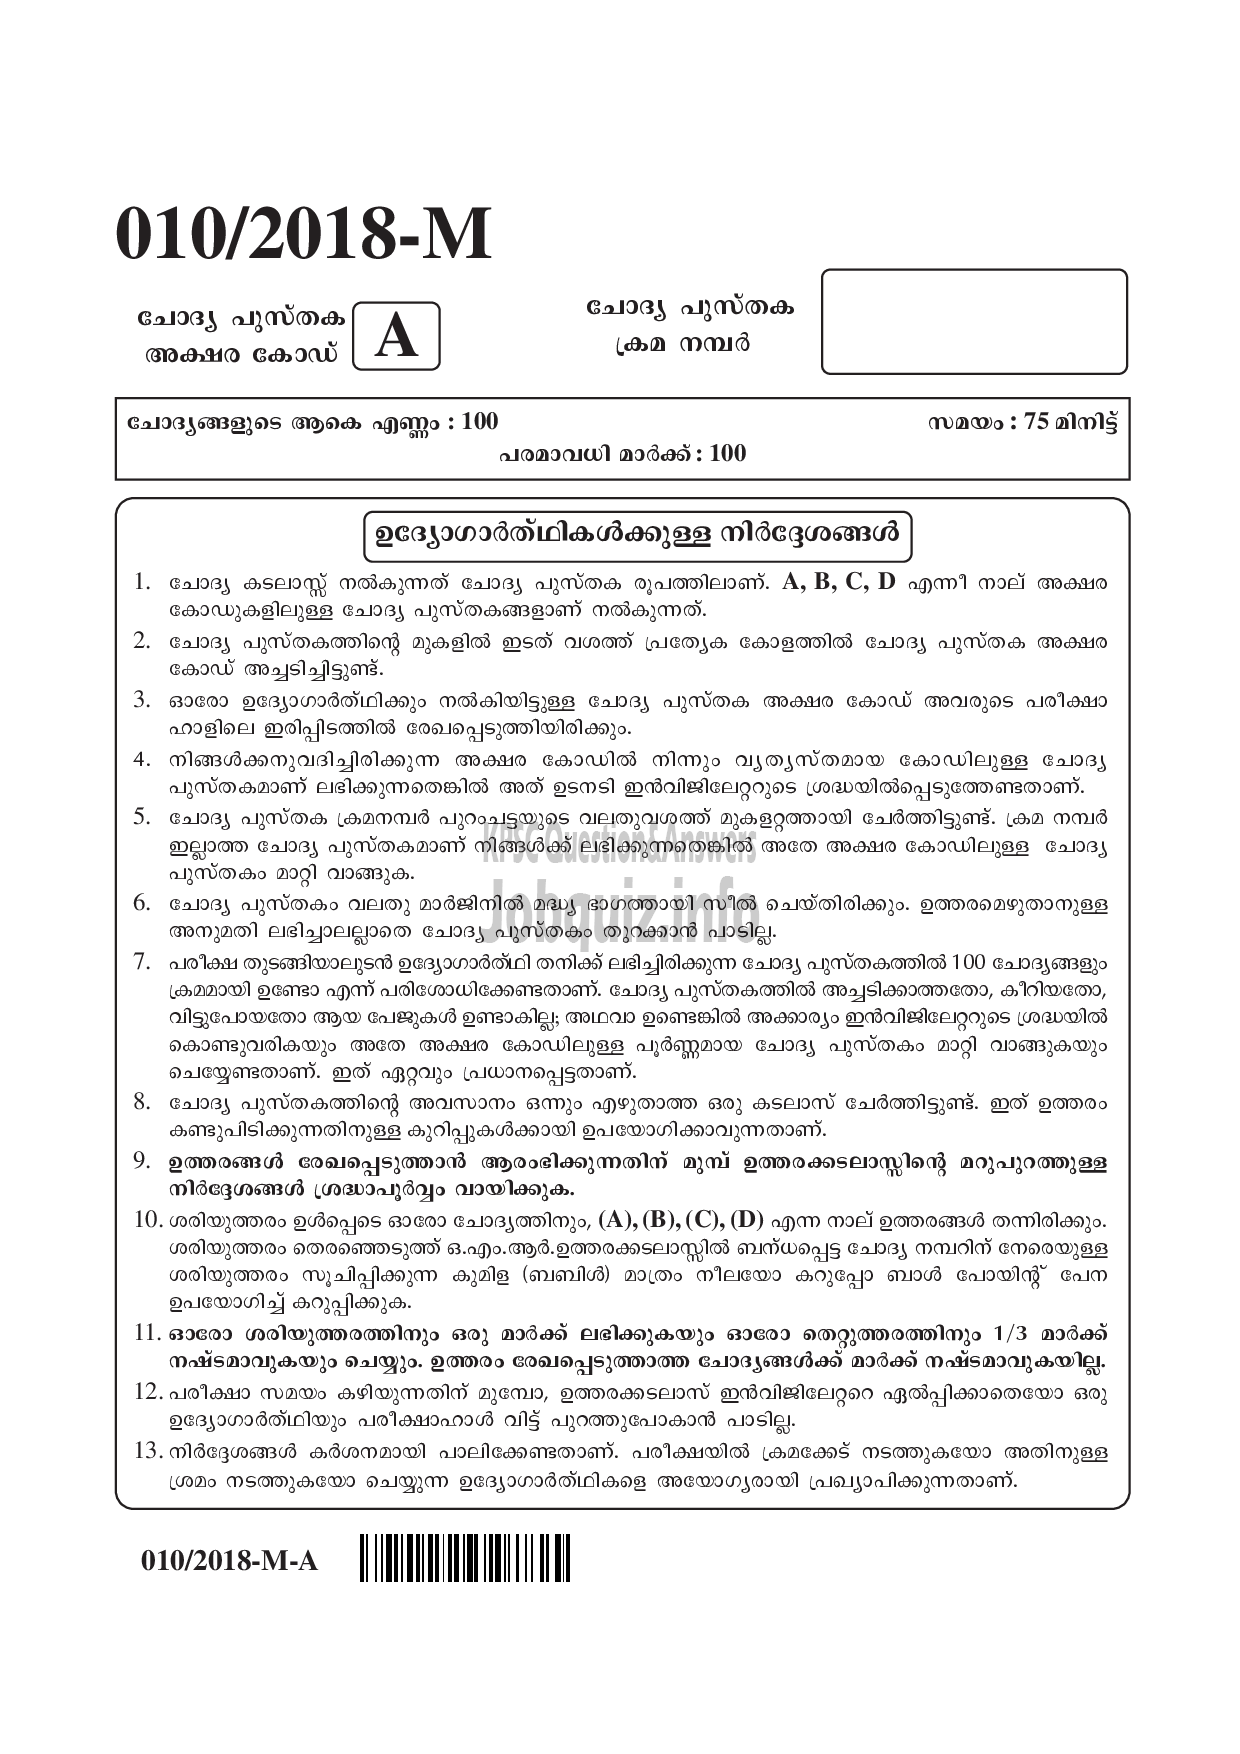 Kerala PSC Question Paper - TRADESMAN TURNING TECHNICAL EDUCATION MALAYALAM-1